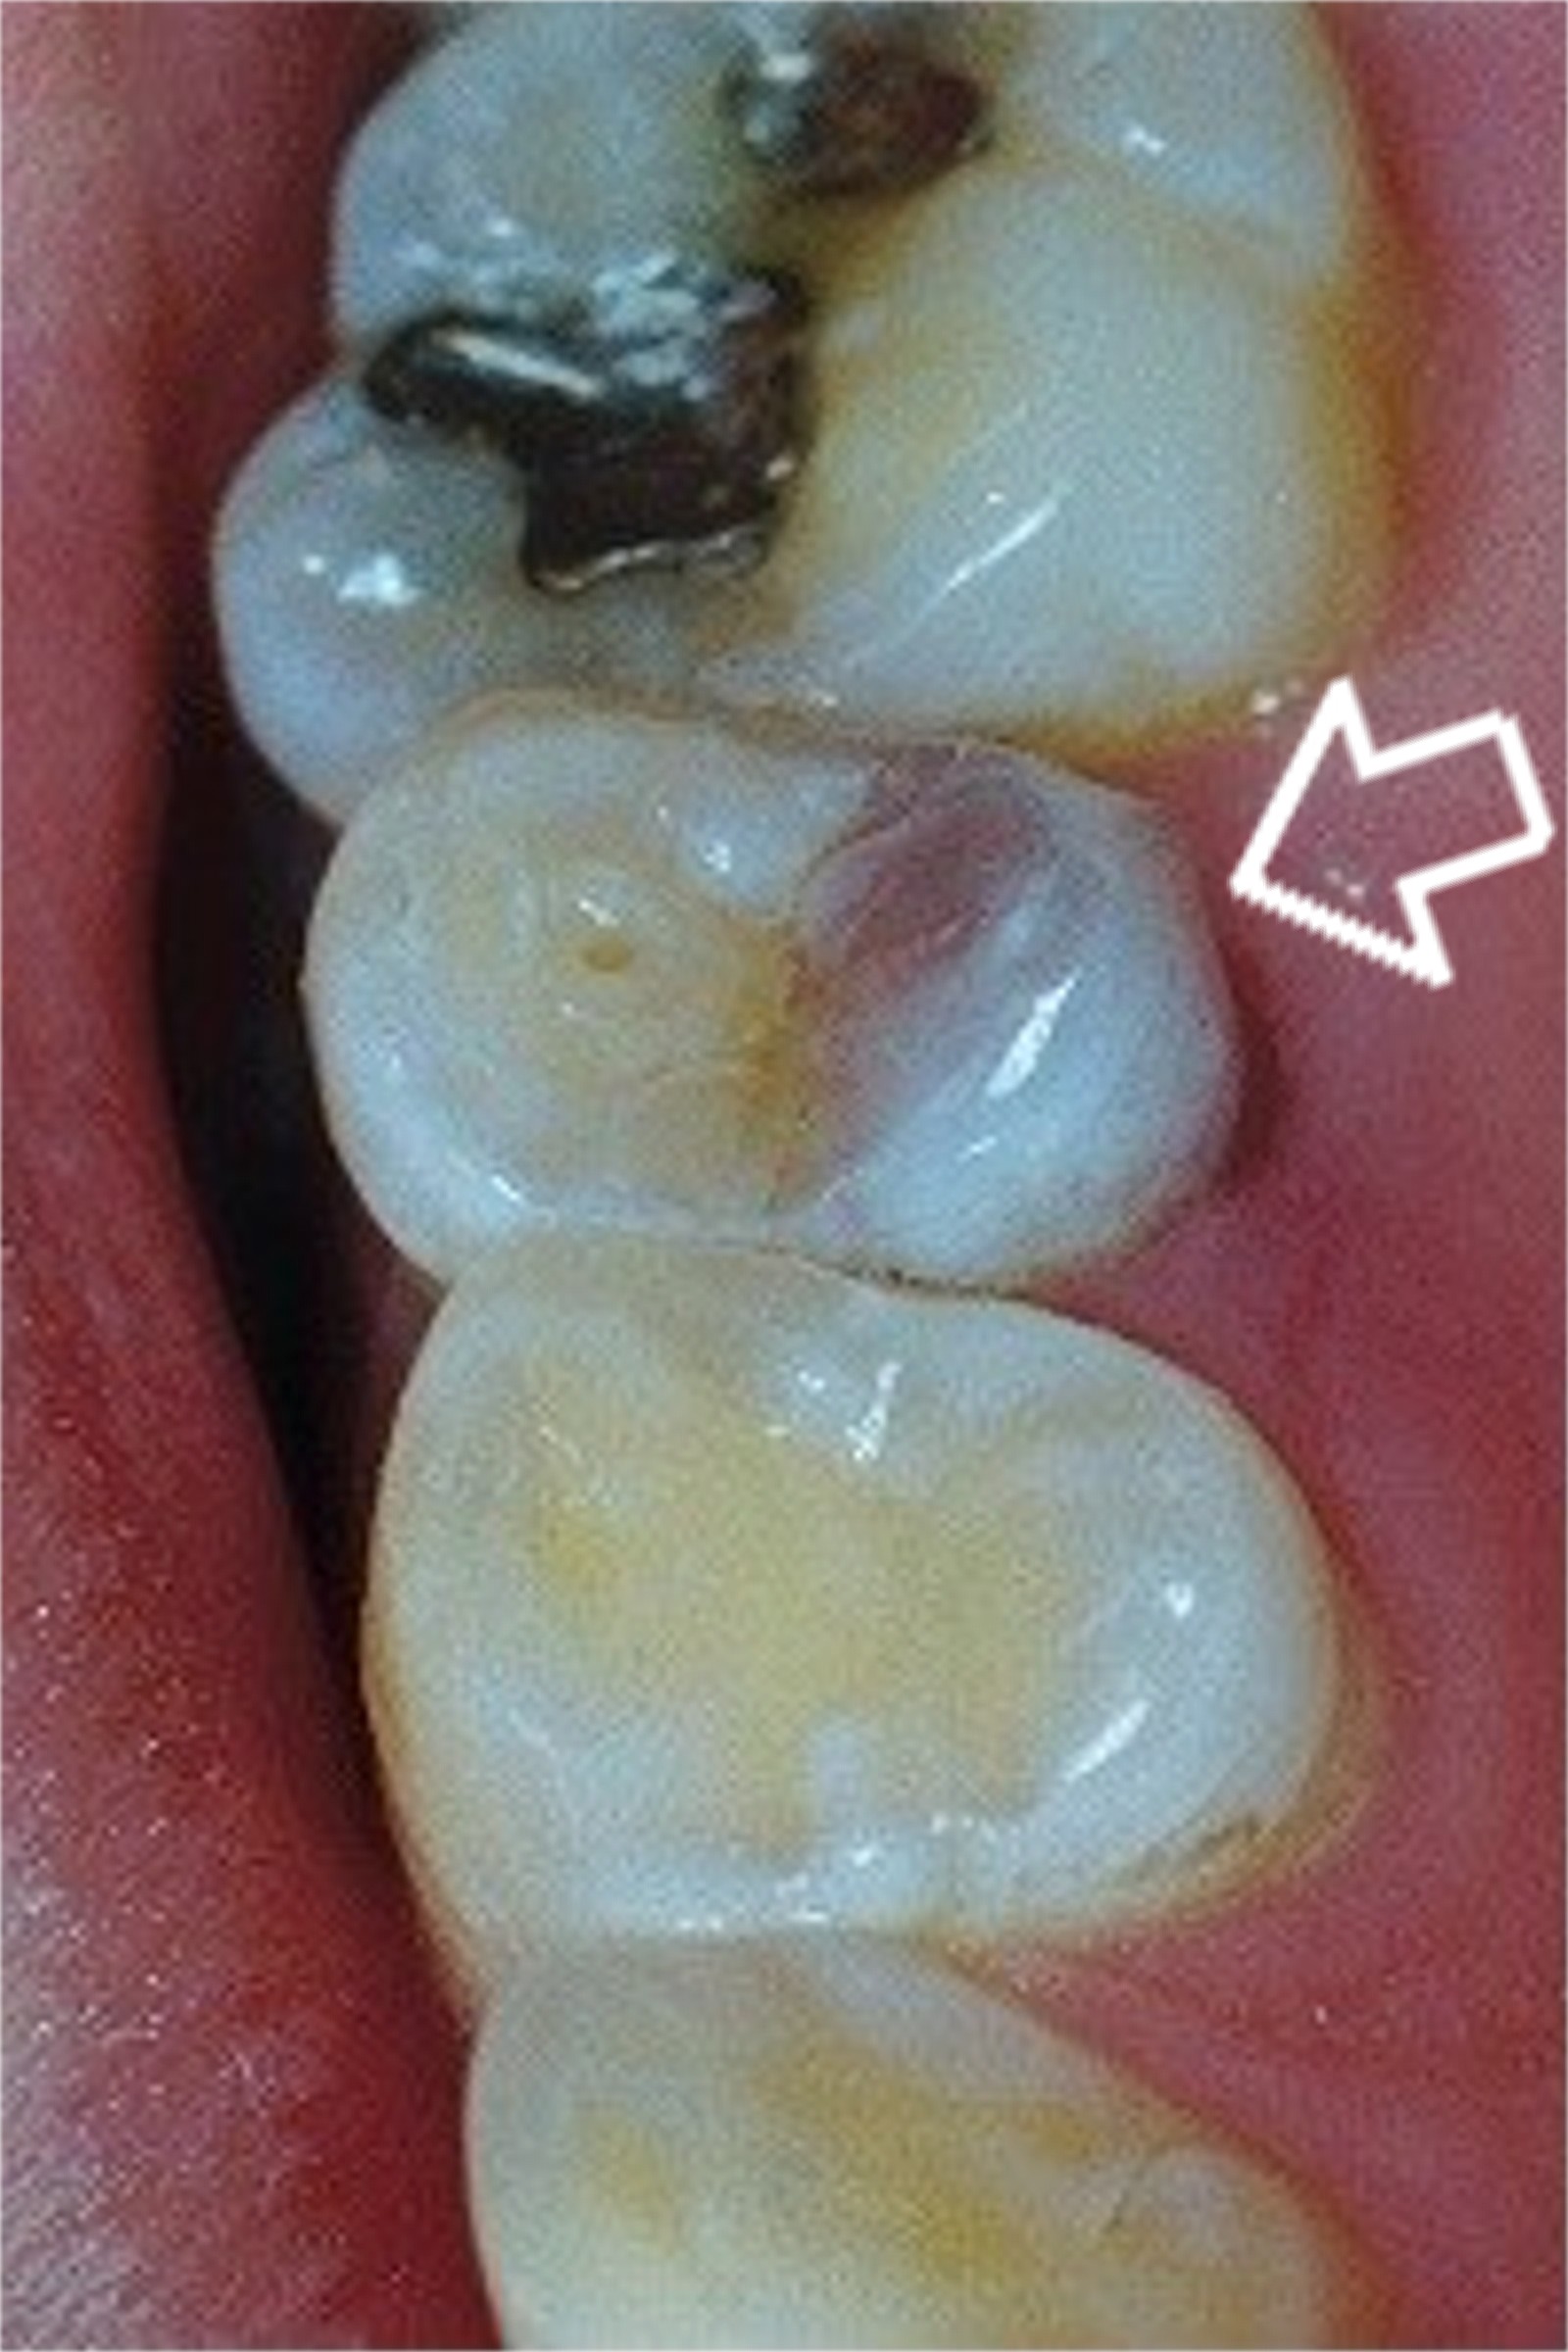 dental darkened tooth photo